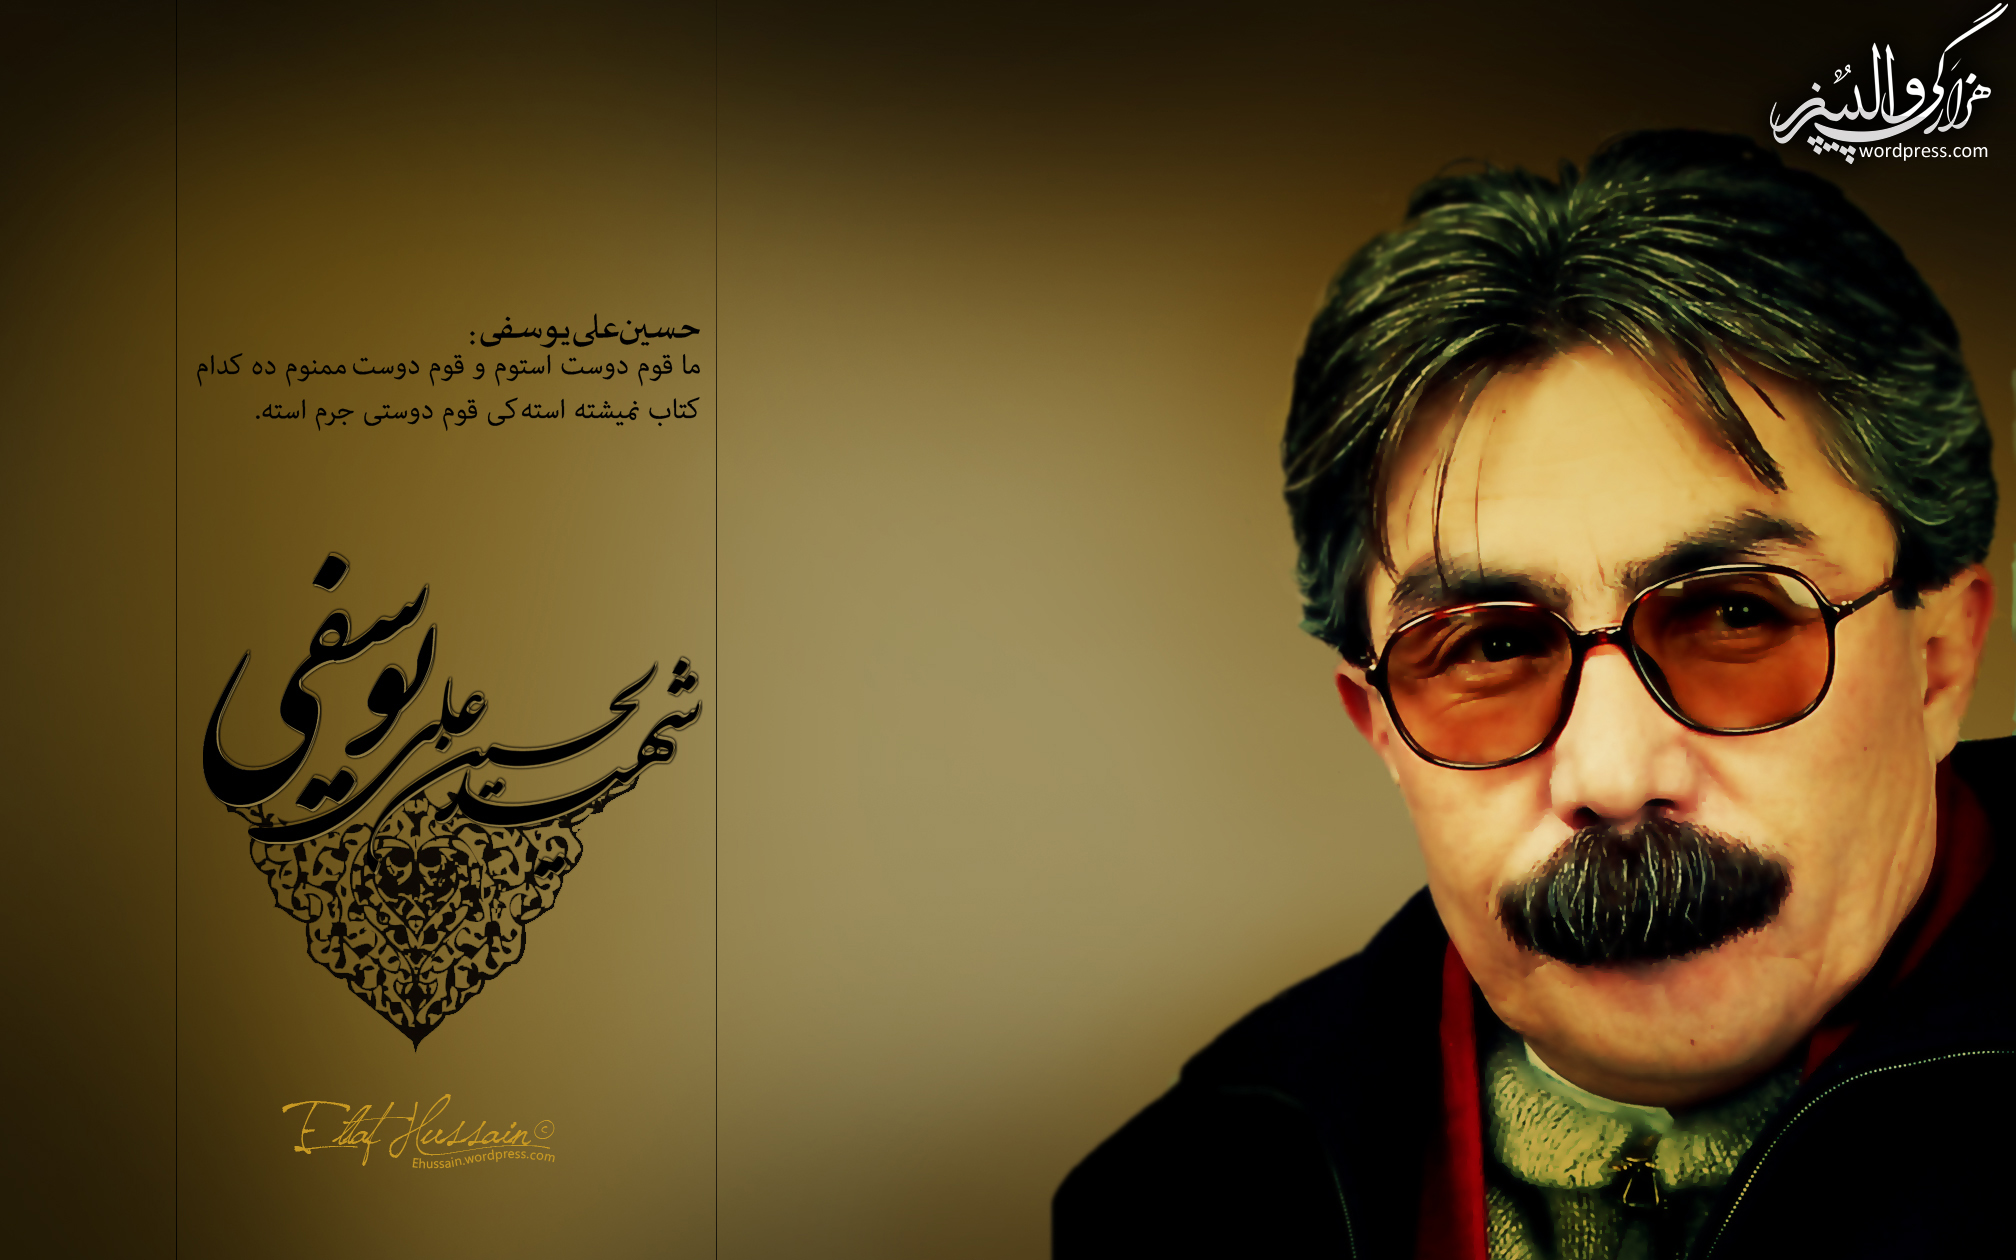 Shaheed Hussain Ali Yousafi by hazaraboyz - shaheed_hussain_ali_yousafi_by_hazaraboyz-d4muwzb